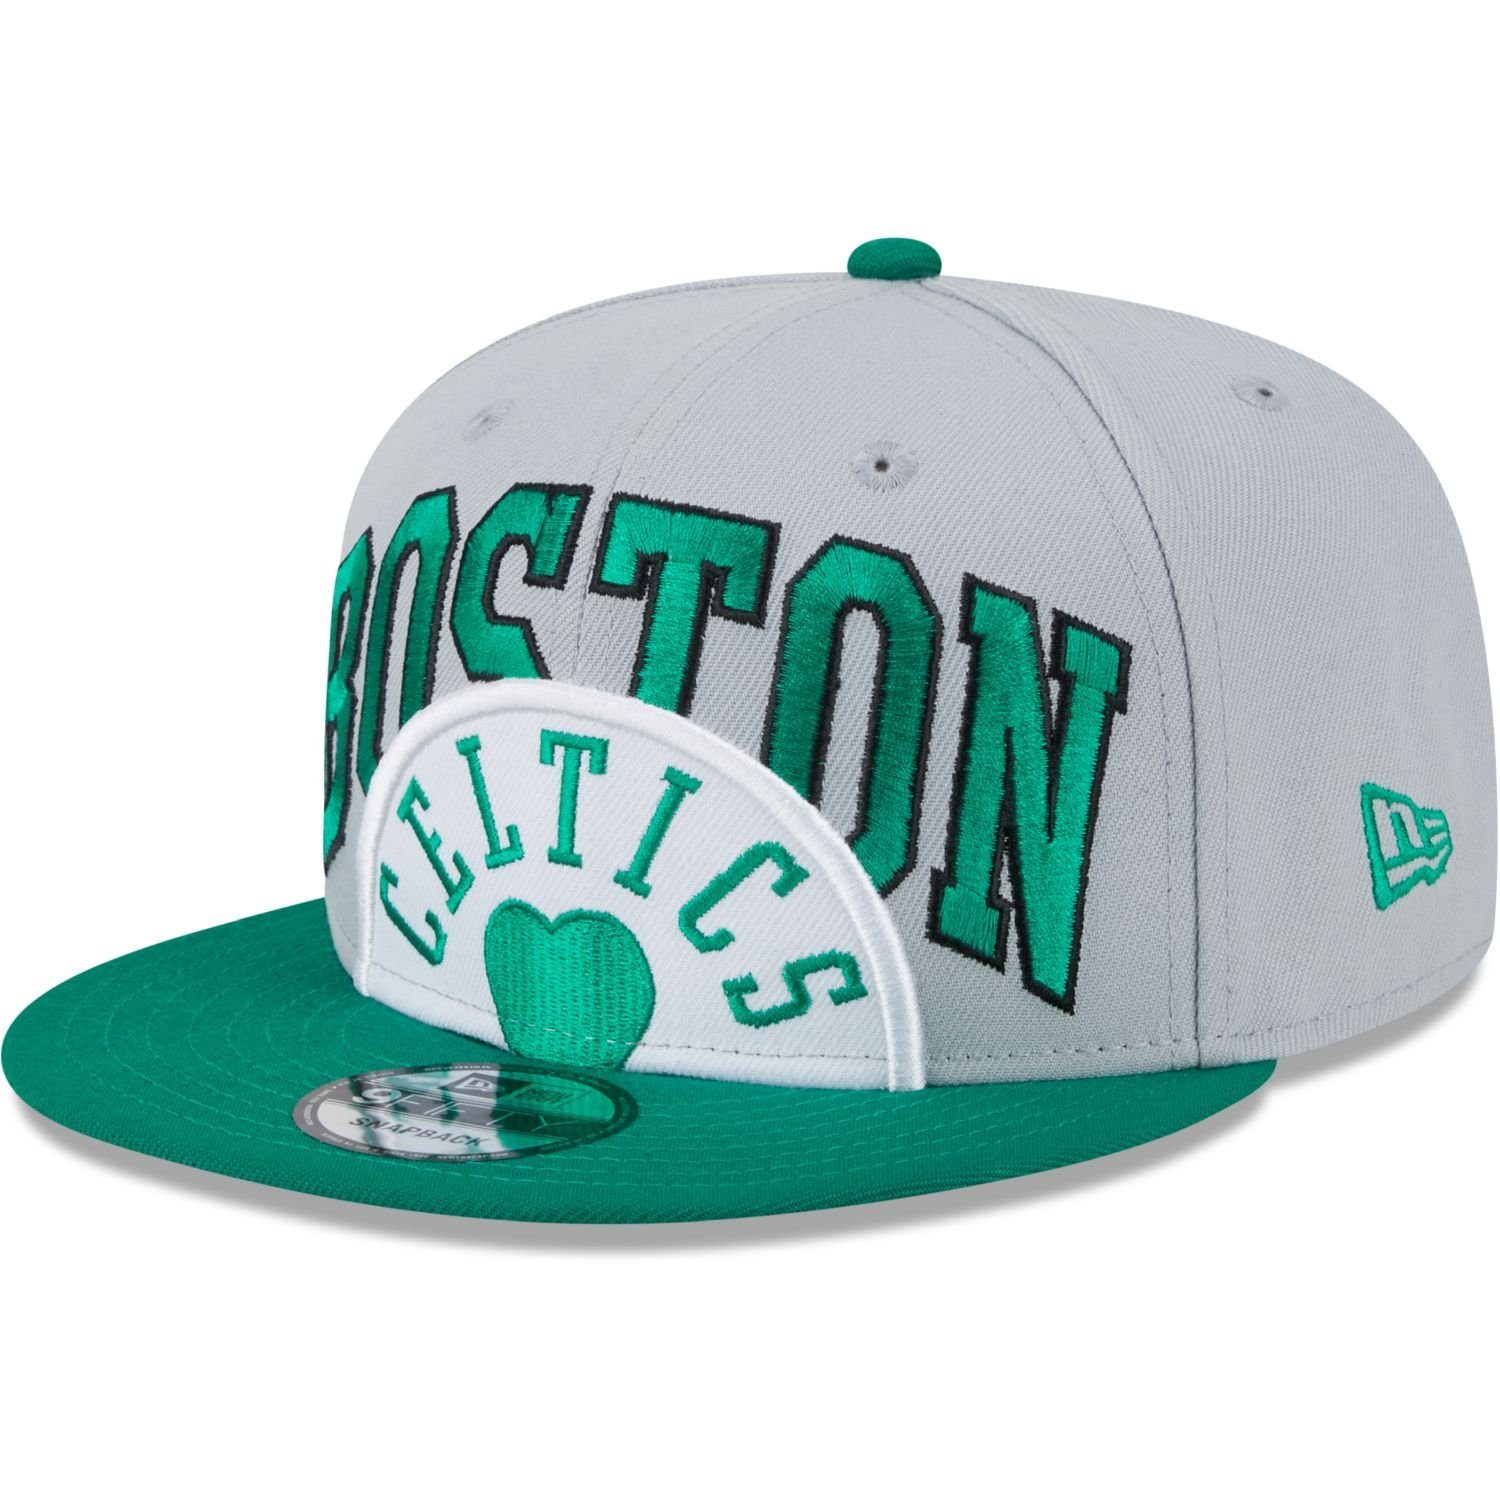 New Era Snapback Cap 9FIFTY NBA TIPOFF Boston Celtics